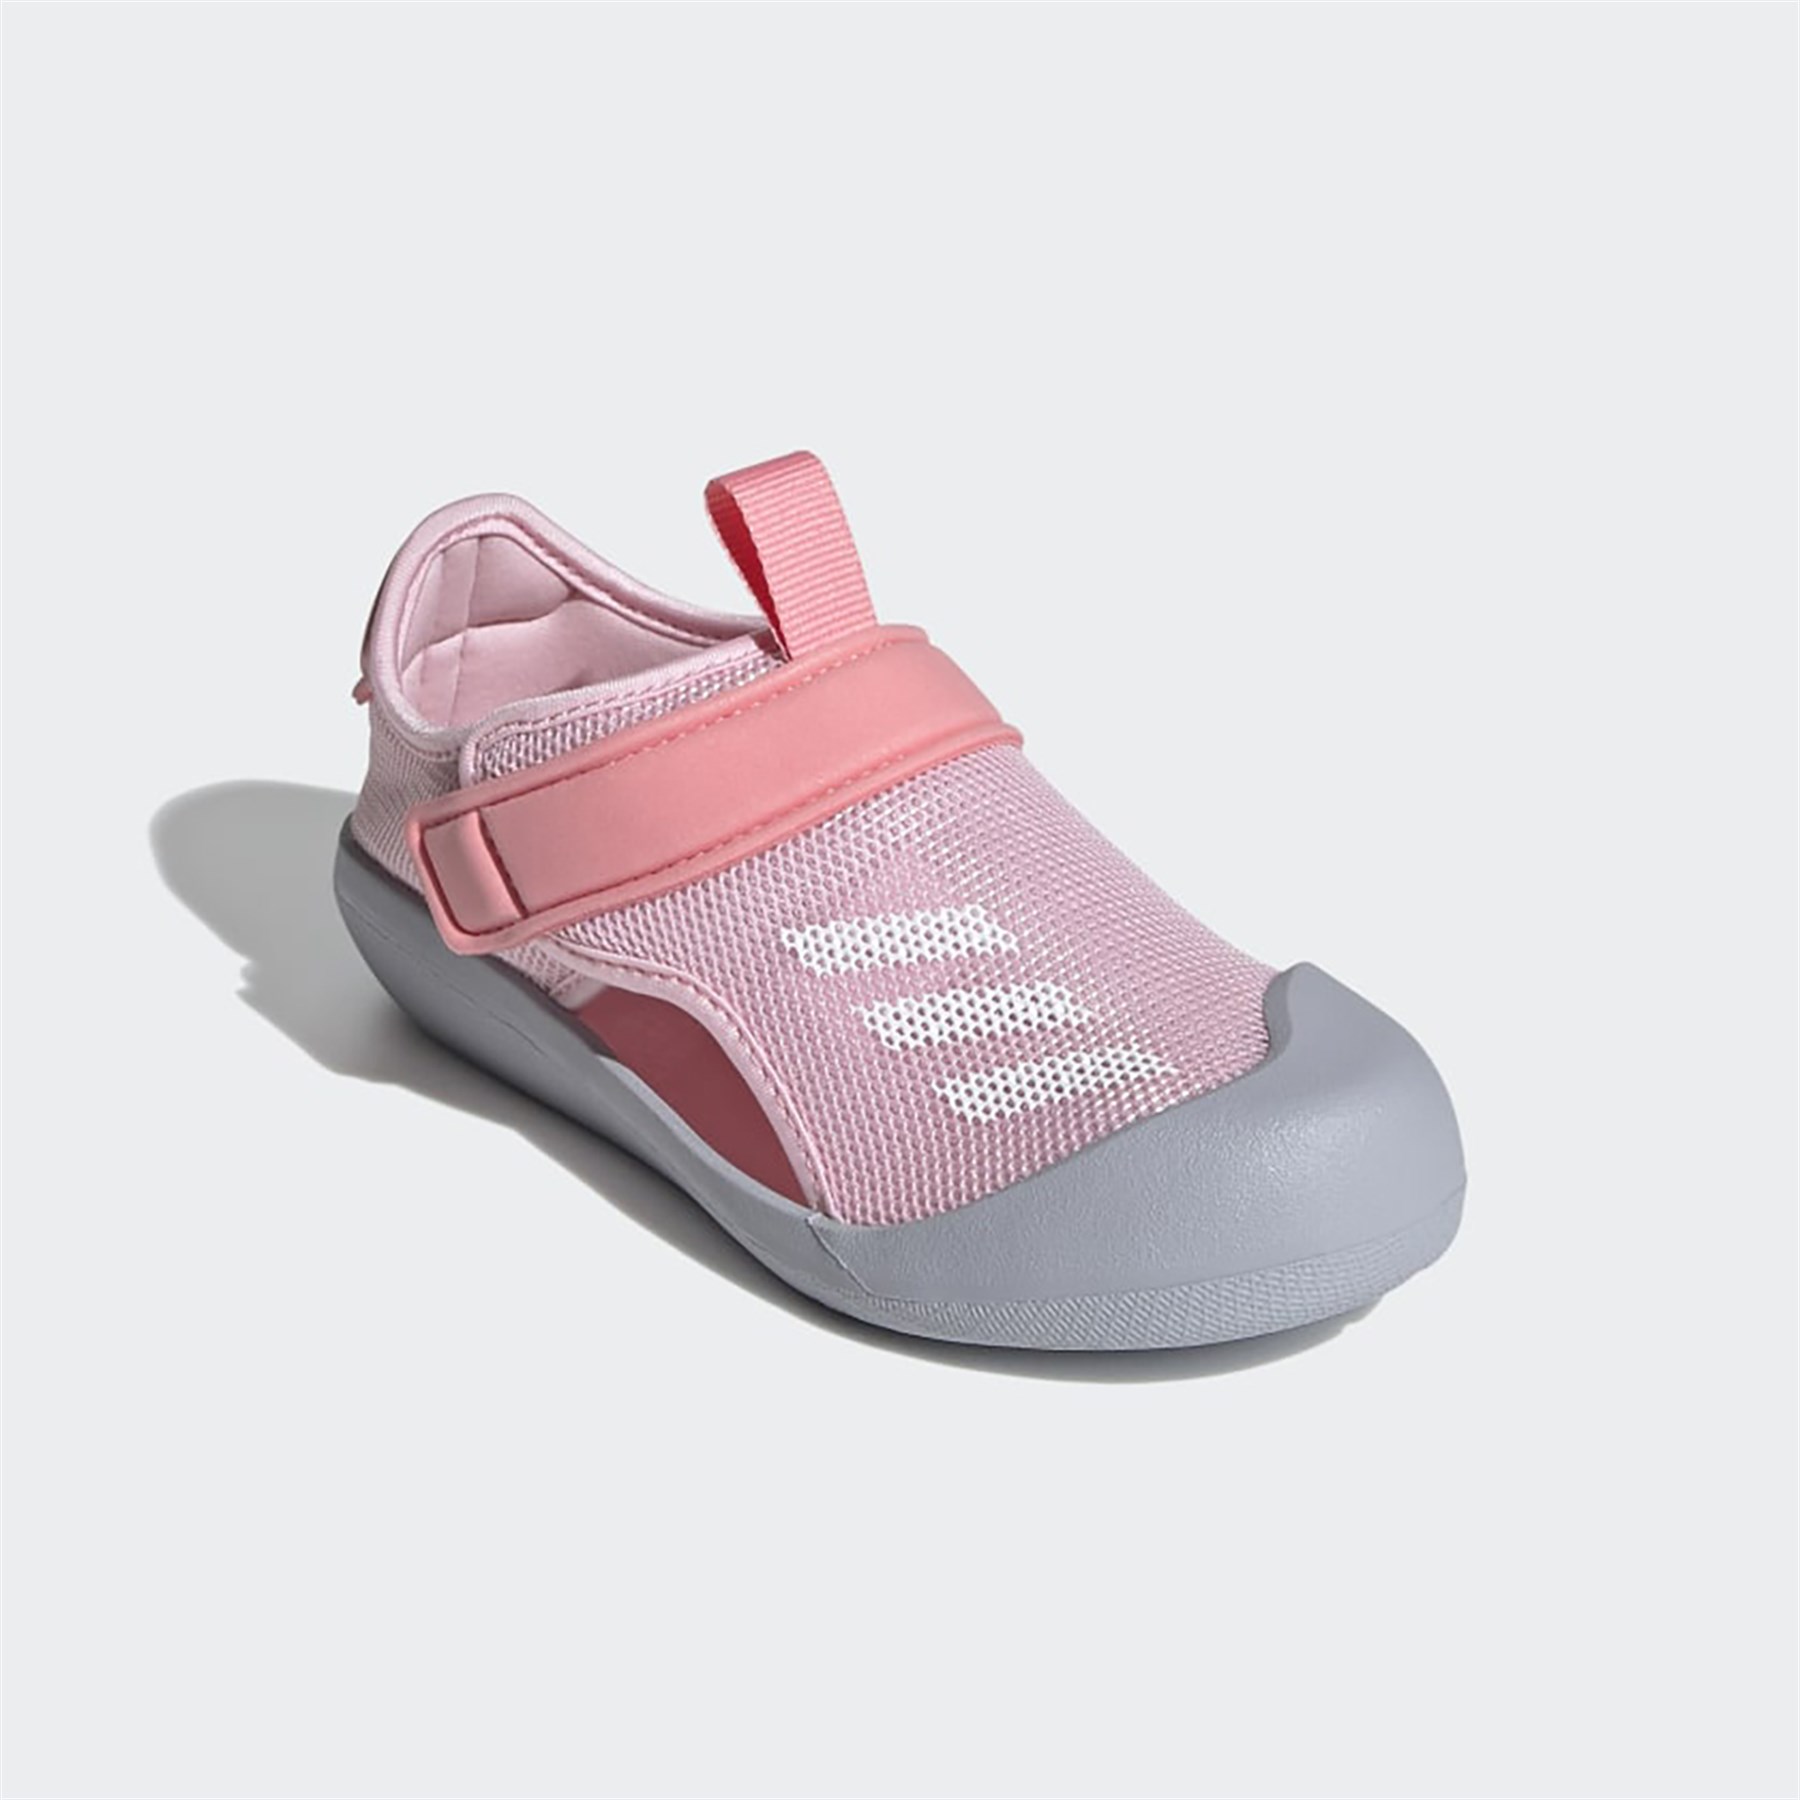 Adidas Kız Çocuk Sandalet Altaventure Ct C Fy6041 ALTAVENTURE CT C